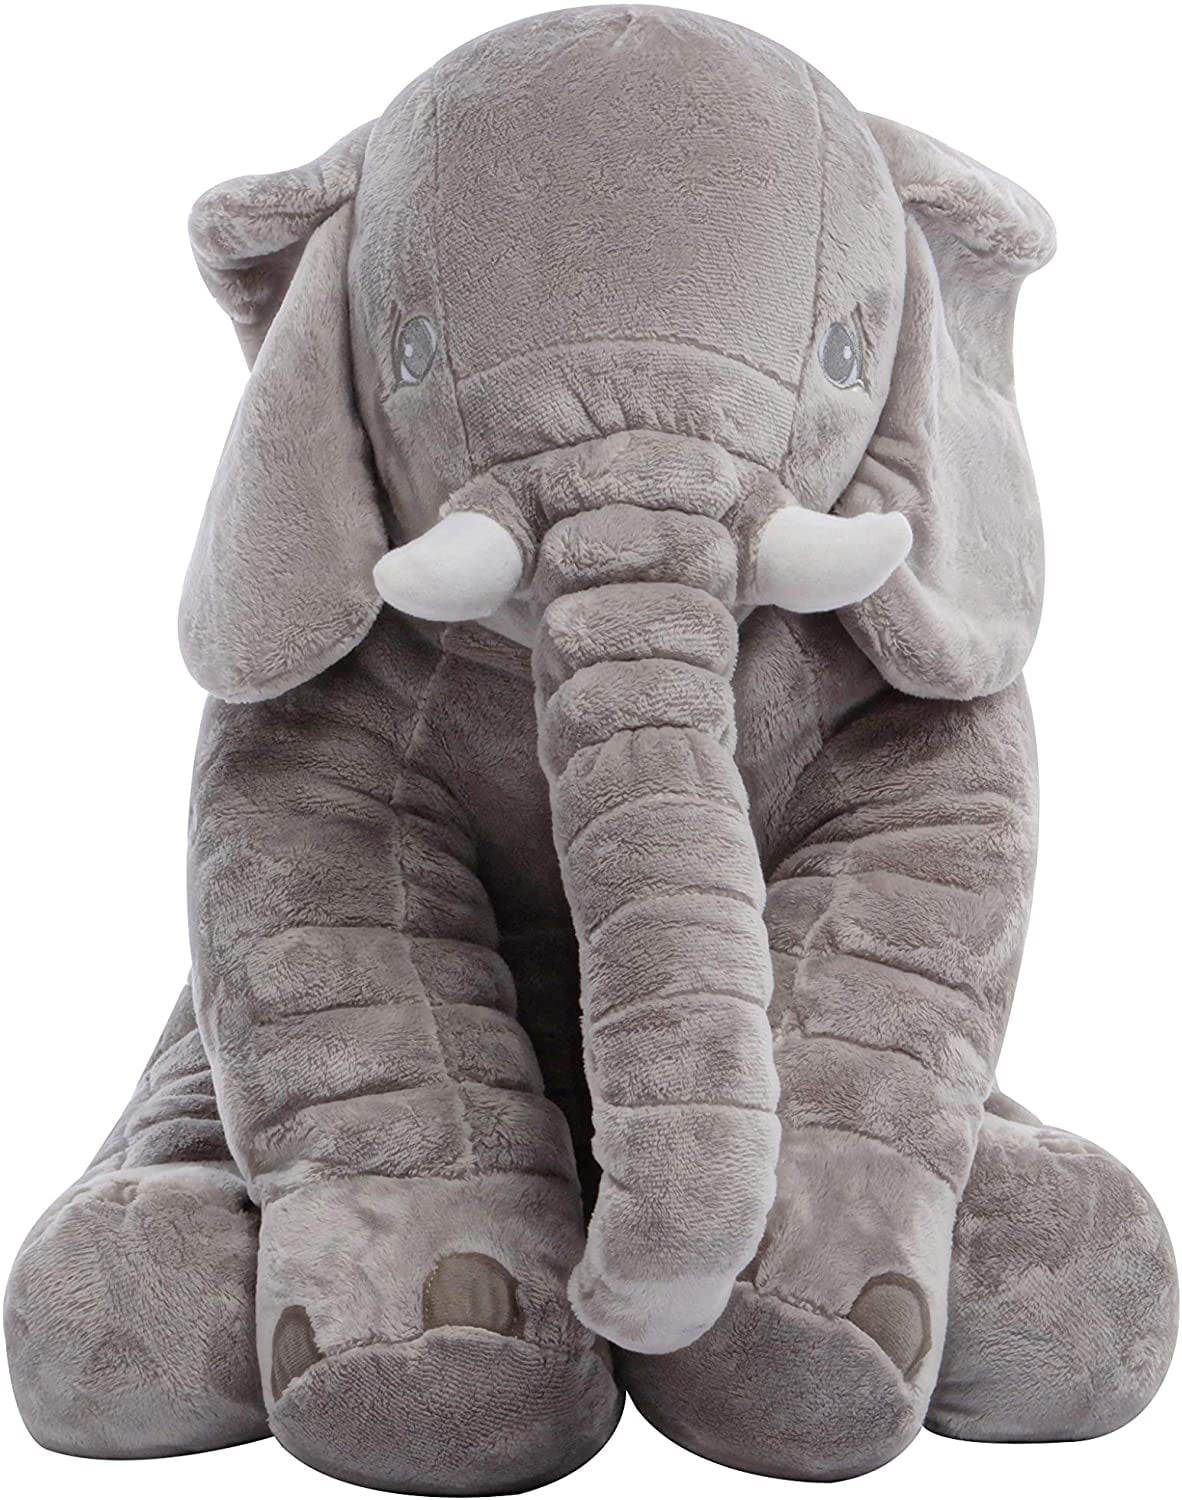 Ikasa Giant Elephant Stuffed Animal Plush Soft Toys Gifts Grey 100cm for sale online 